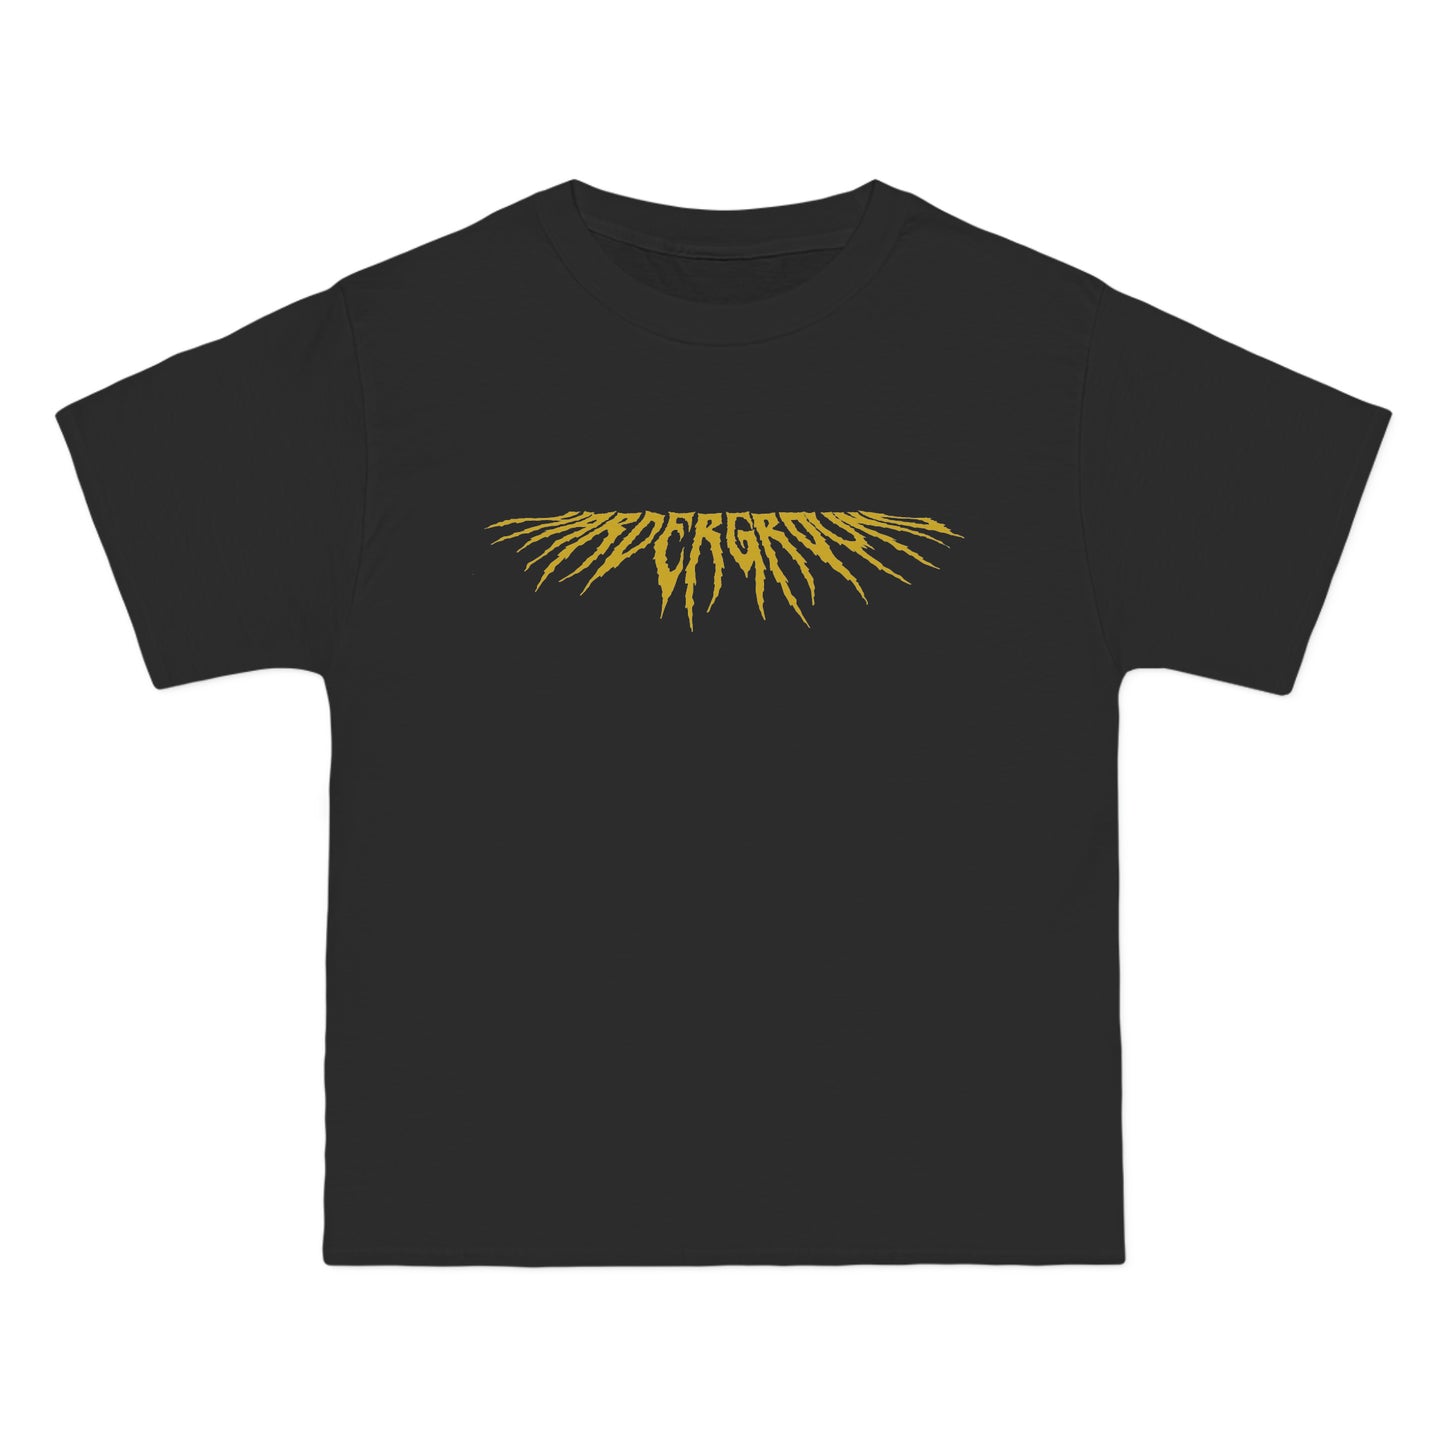 FREDDY KRUEGER Harderground - Front & back logos - Beefy-T®  Short-Sleeve T-Shirt